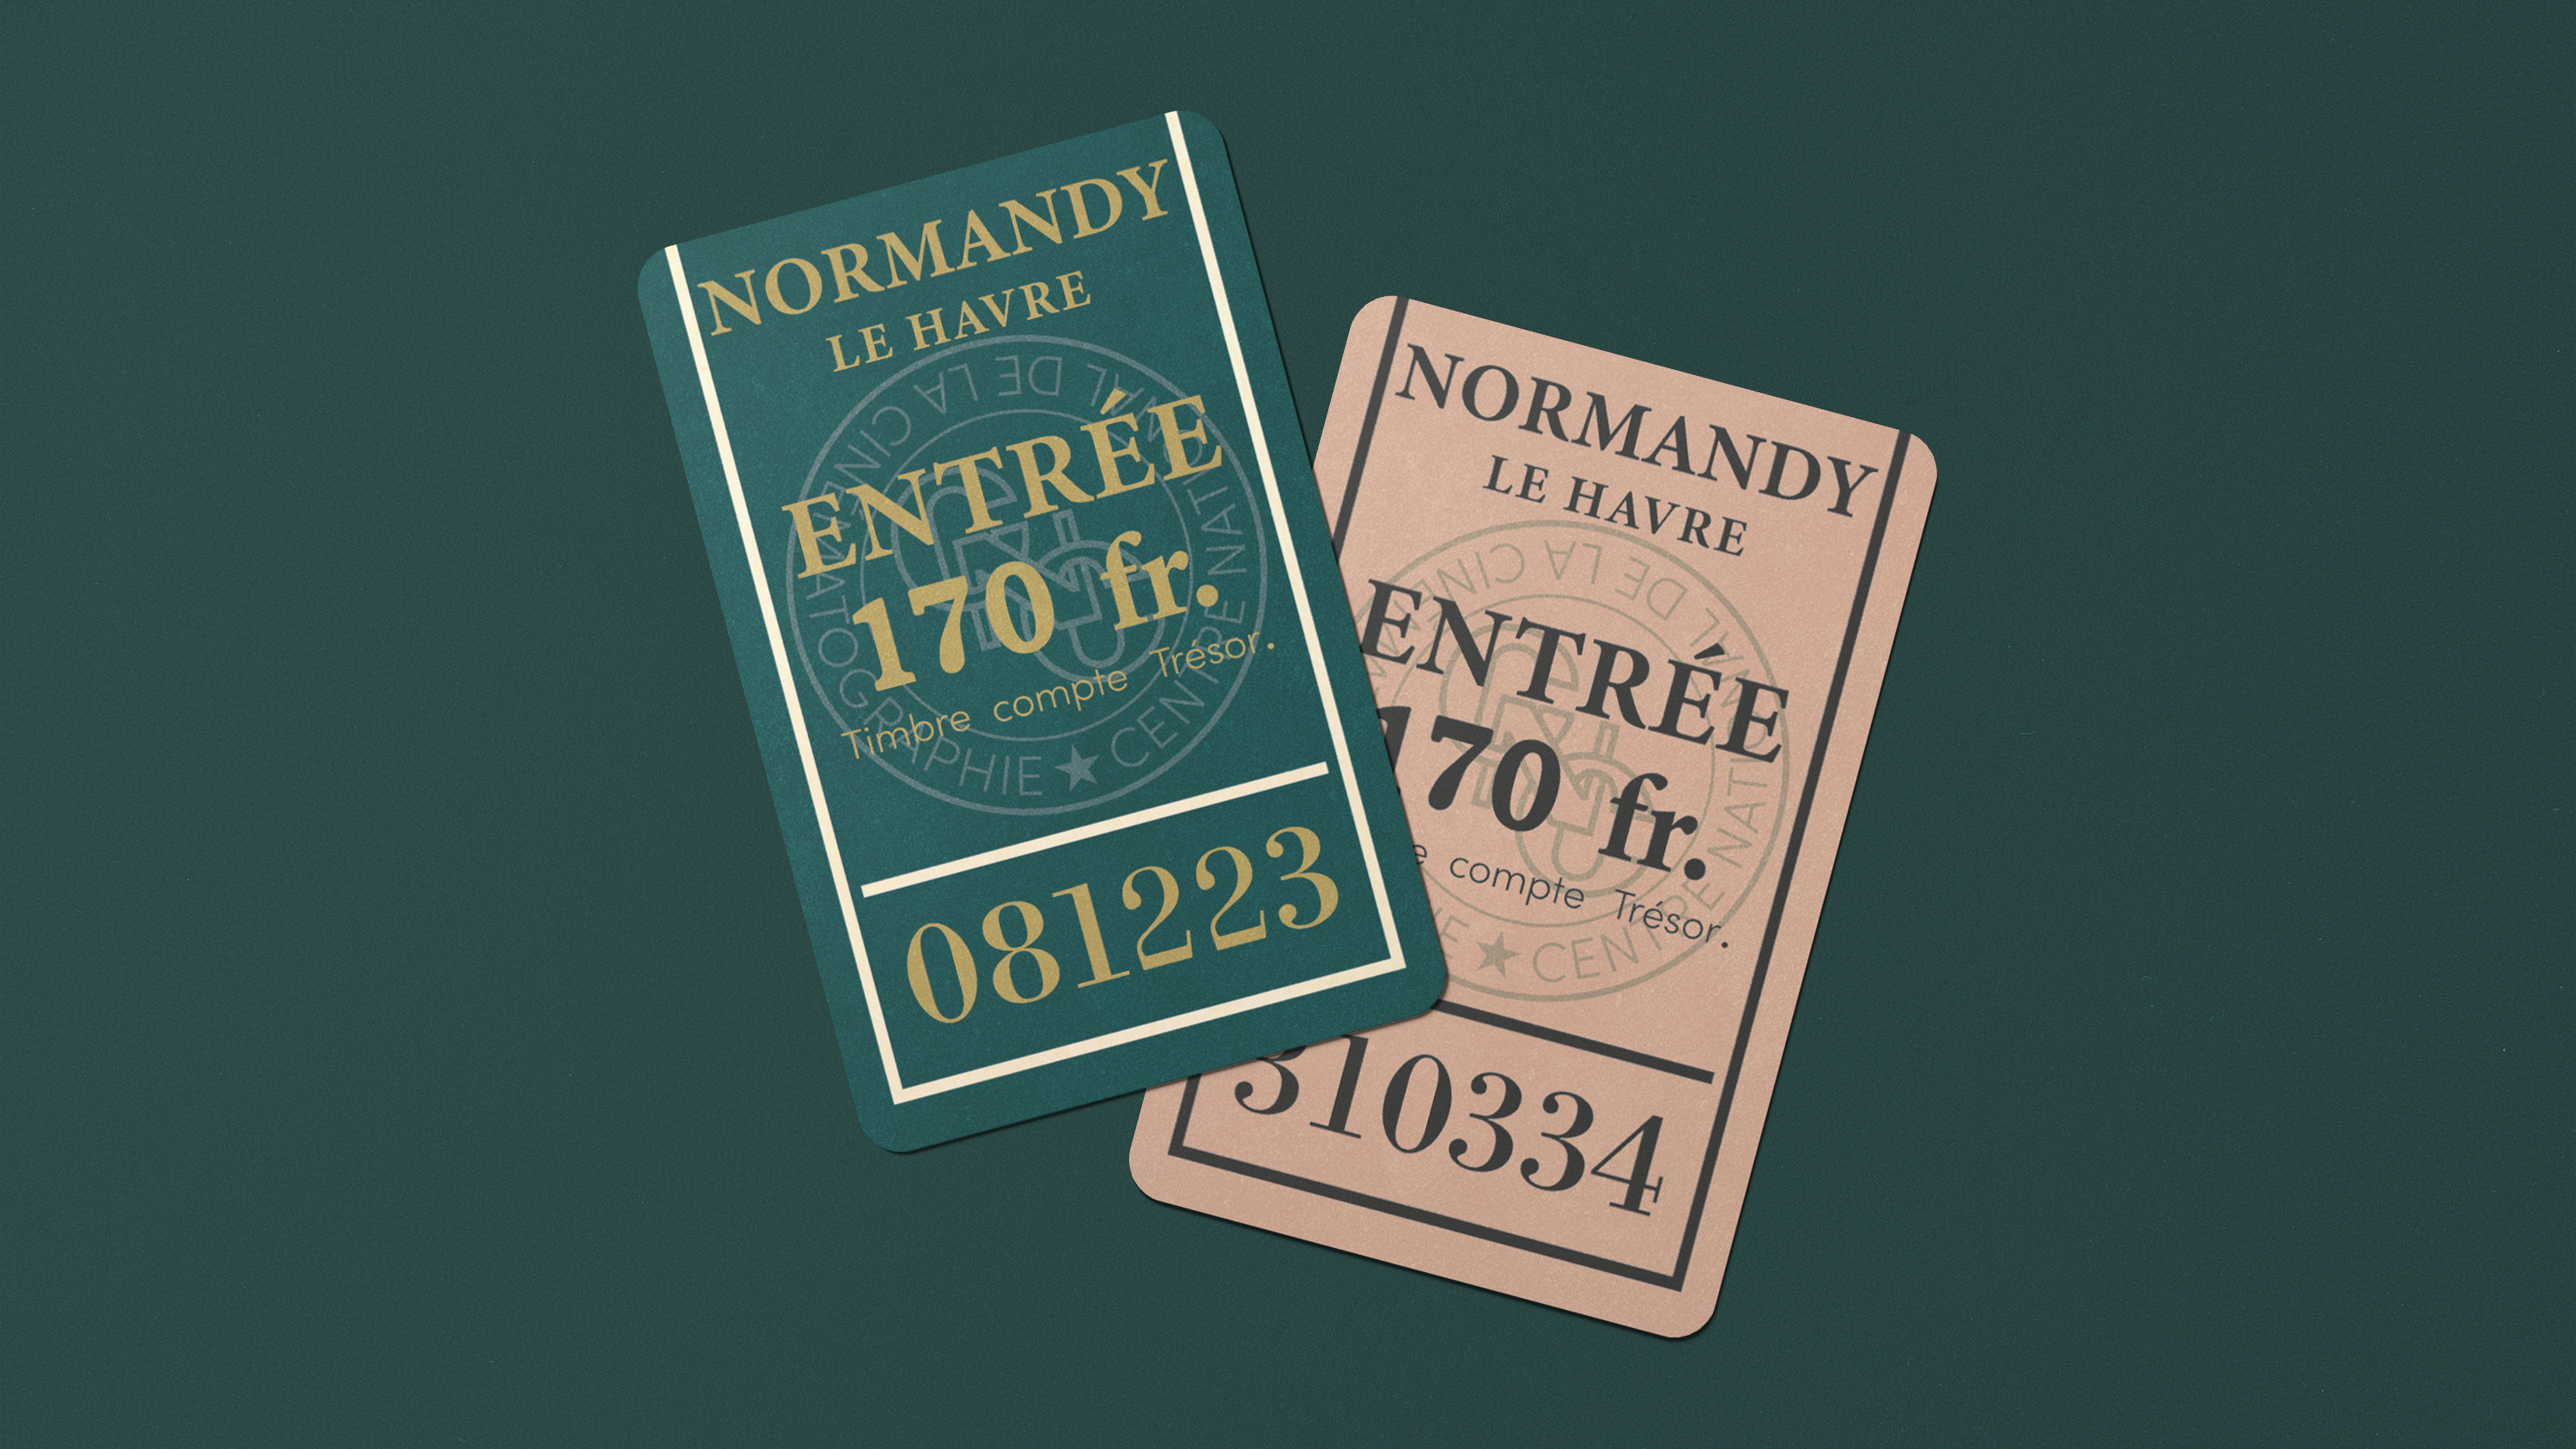 Theatre le Normandy - Billet sticker